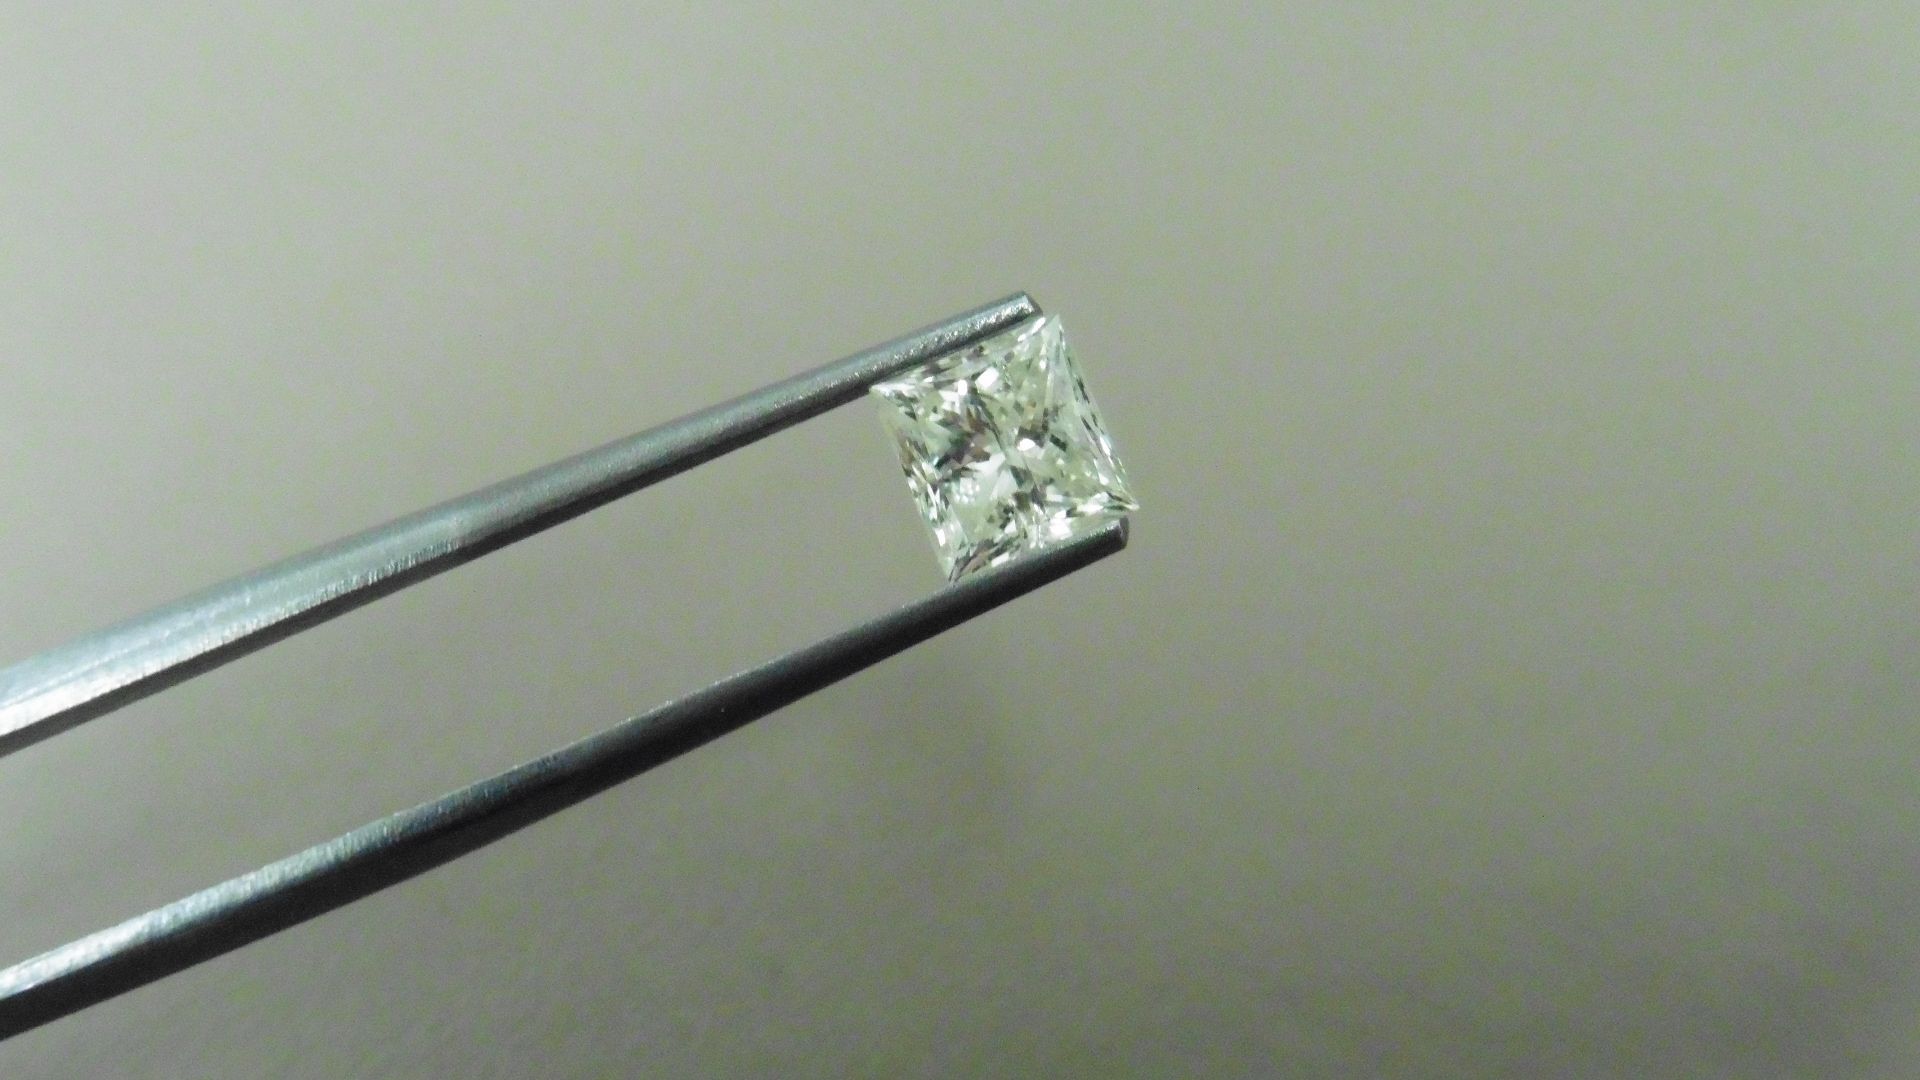 1.02ct natural loose princess cut diamond. K colour and si2 clarity. 5.31 x 5.16 x 4.02mm. No